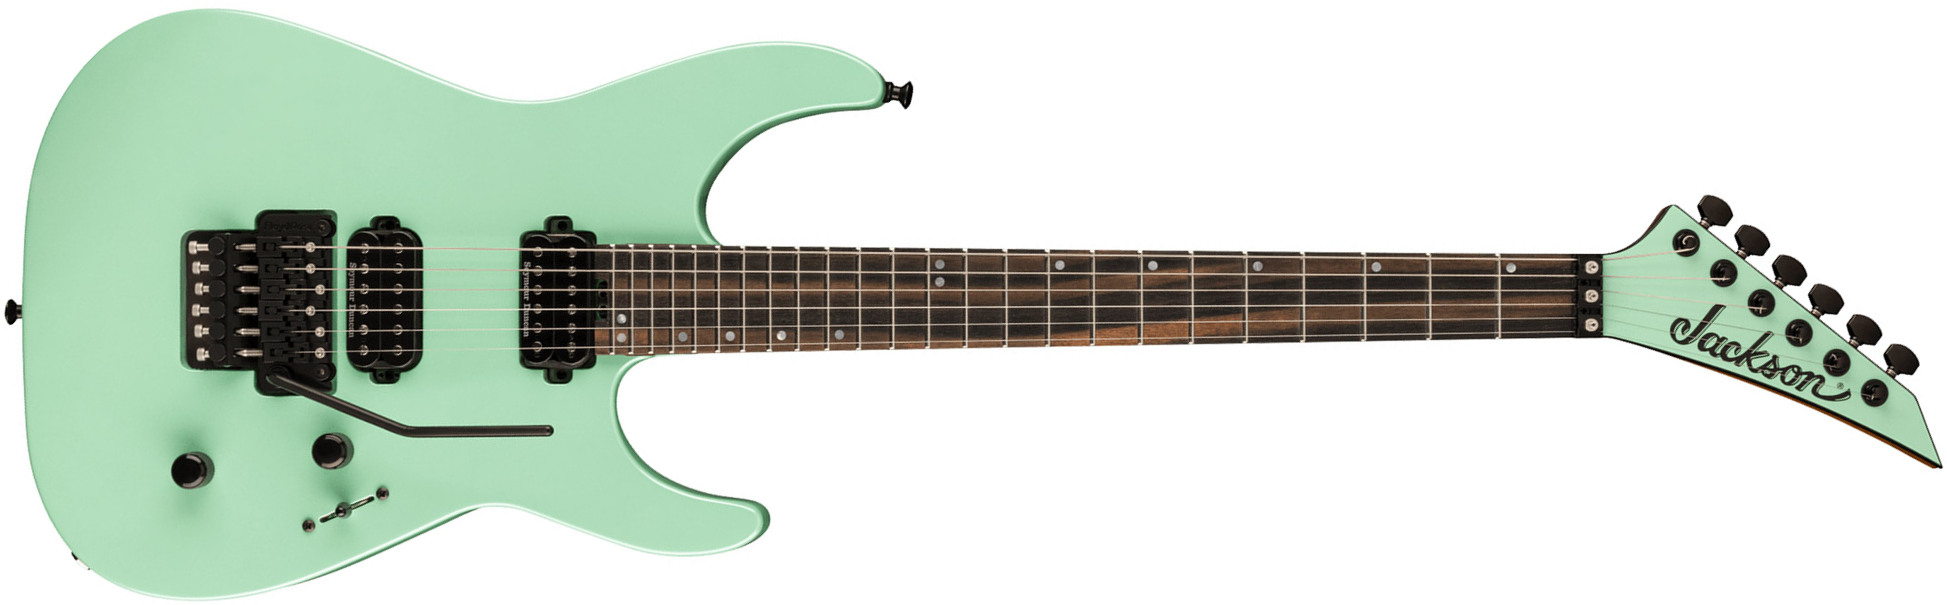 Jackson American Virtuoso 2h Seymour Duncan Fr Eb - Specific Ocean - Str shape electric guitar - Main picture